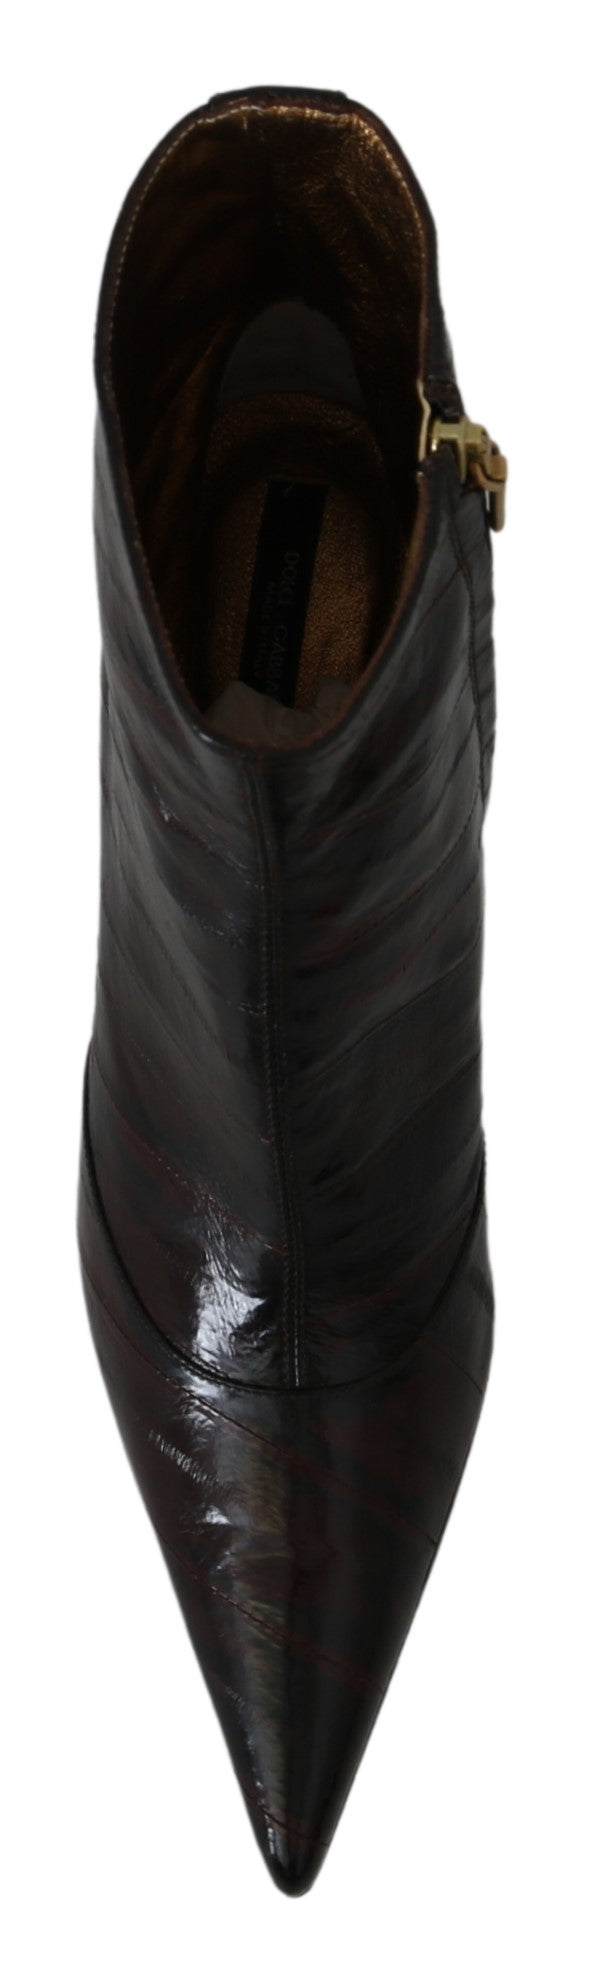 Bordeaux Eel Leather Ankle Heels Boots